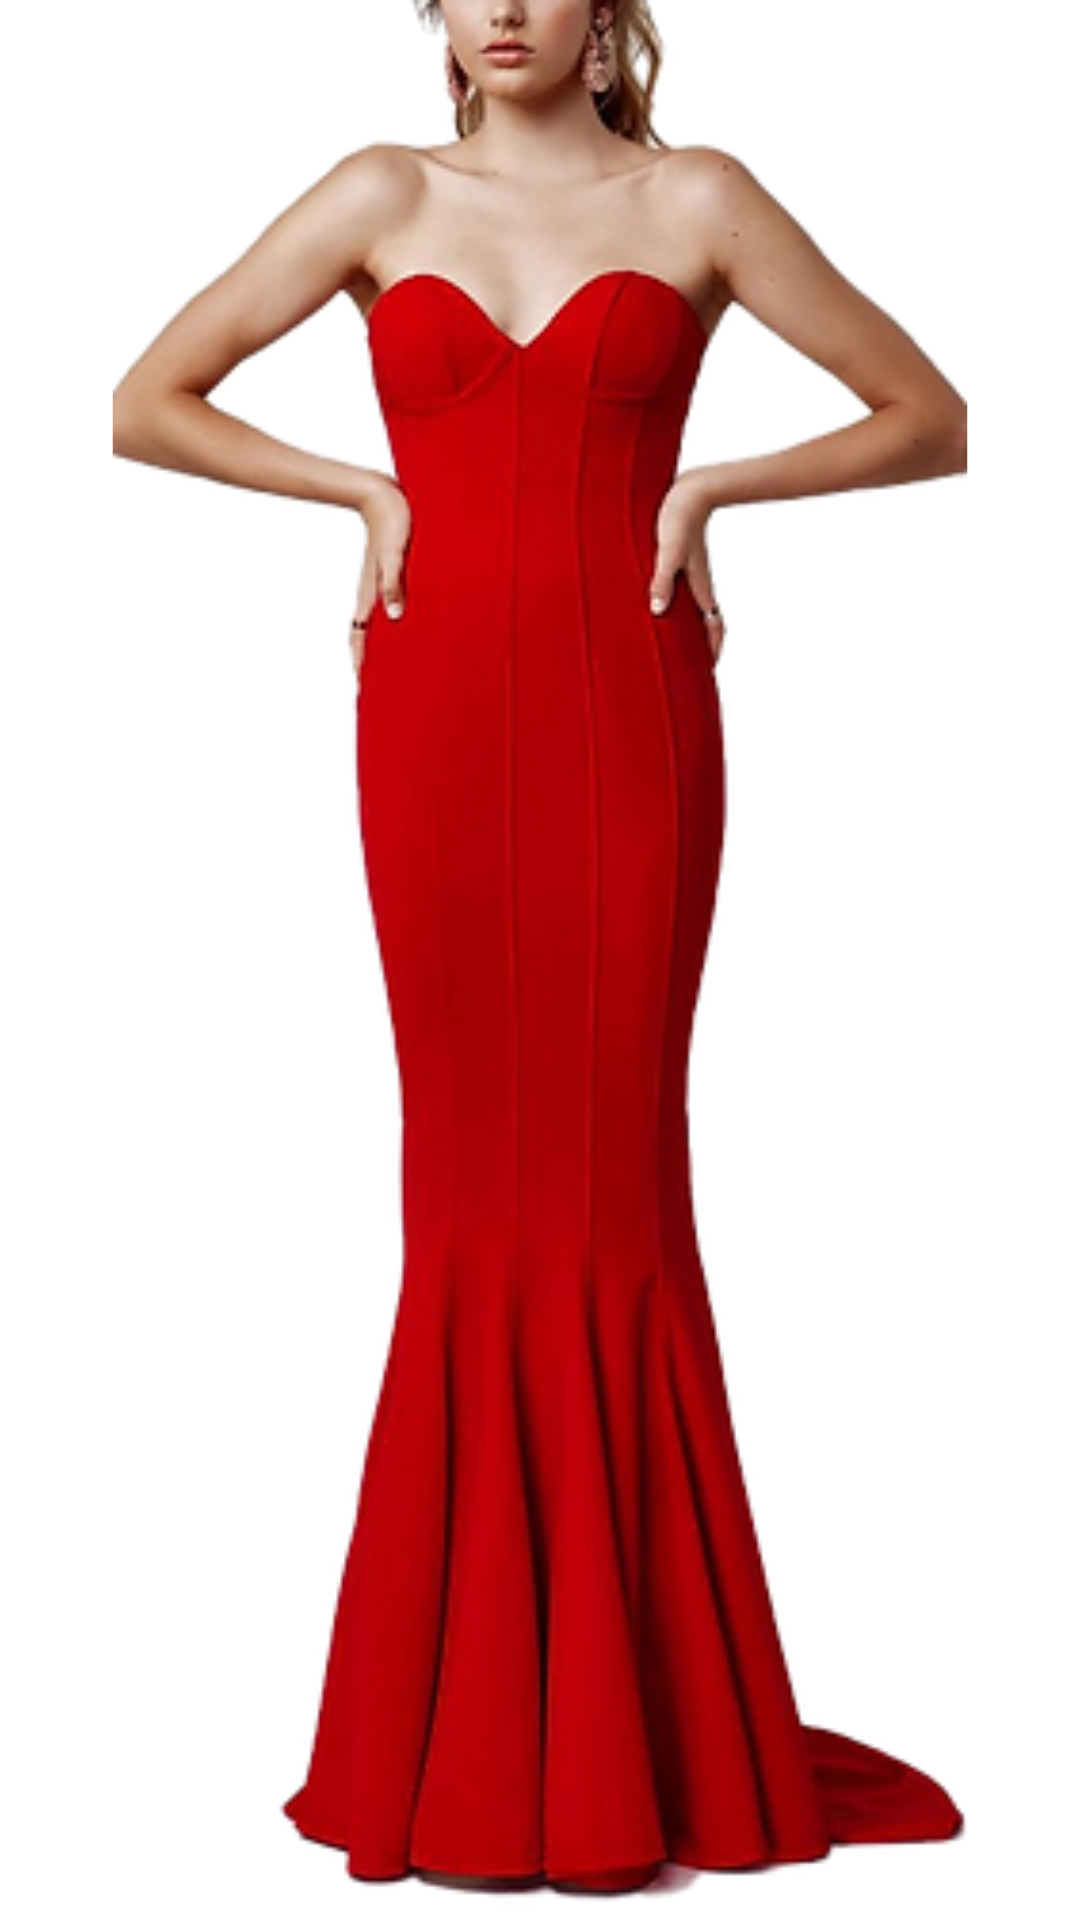 Lexi Sahar Panelled Mermaid Dress in Red